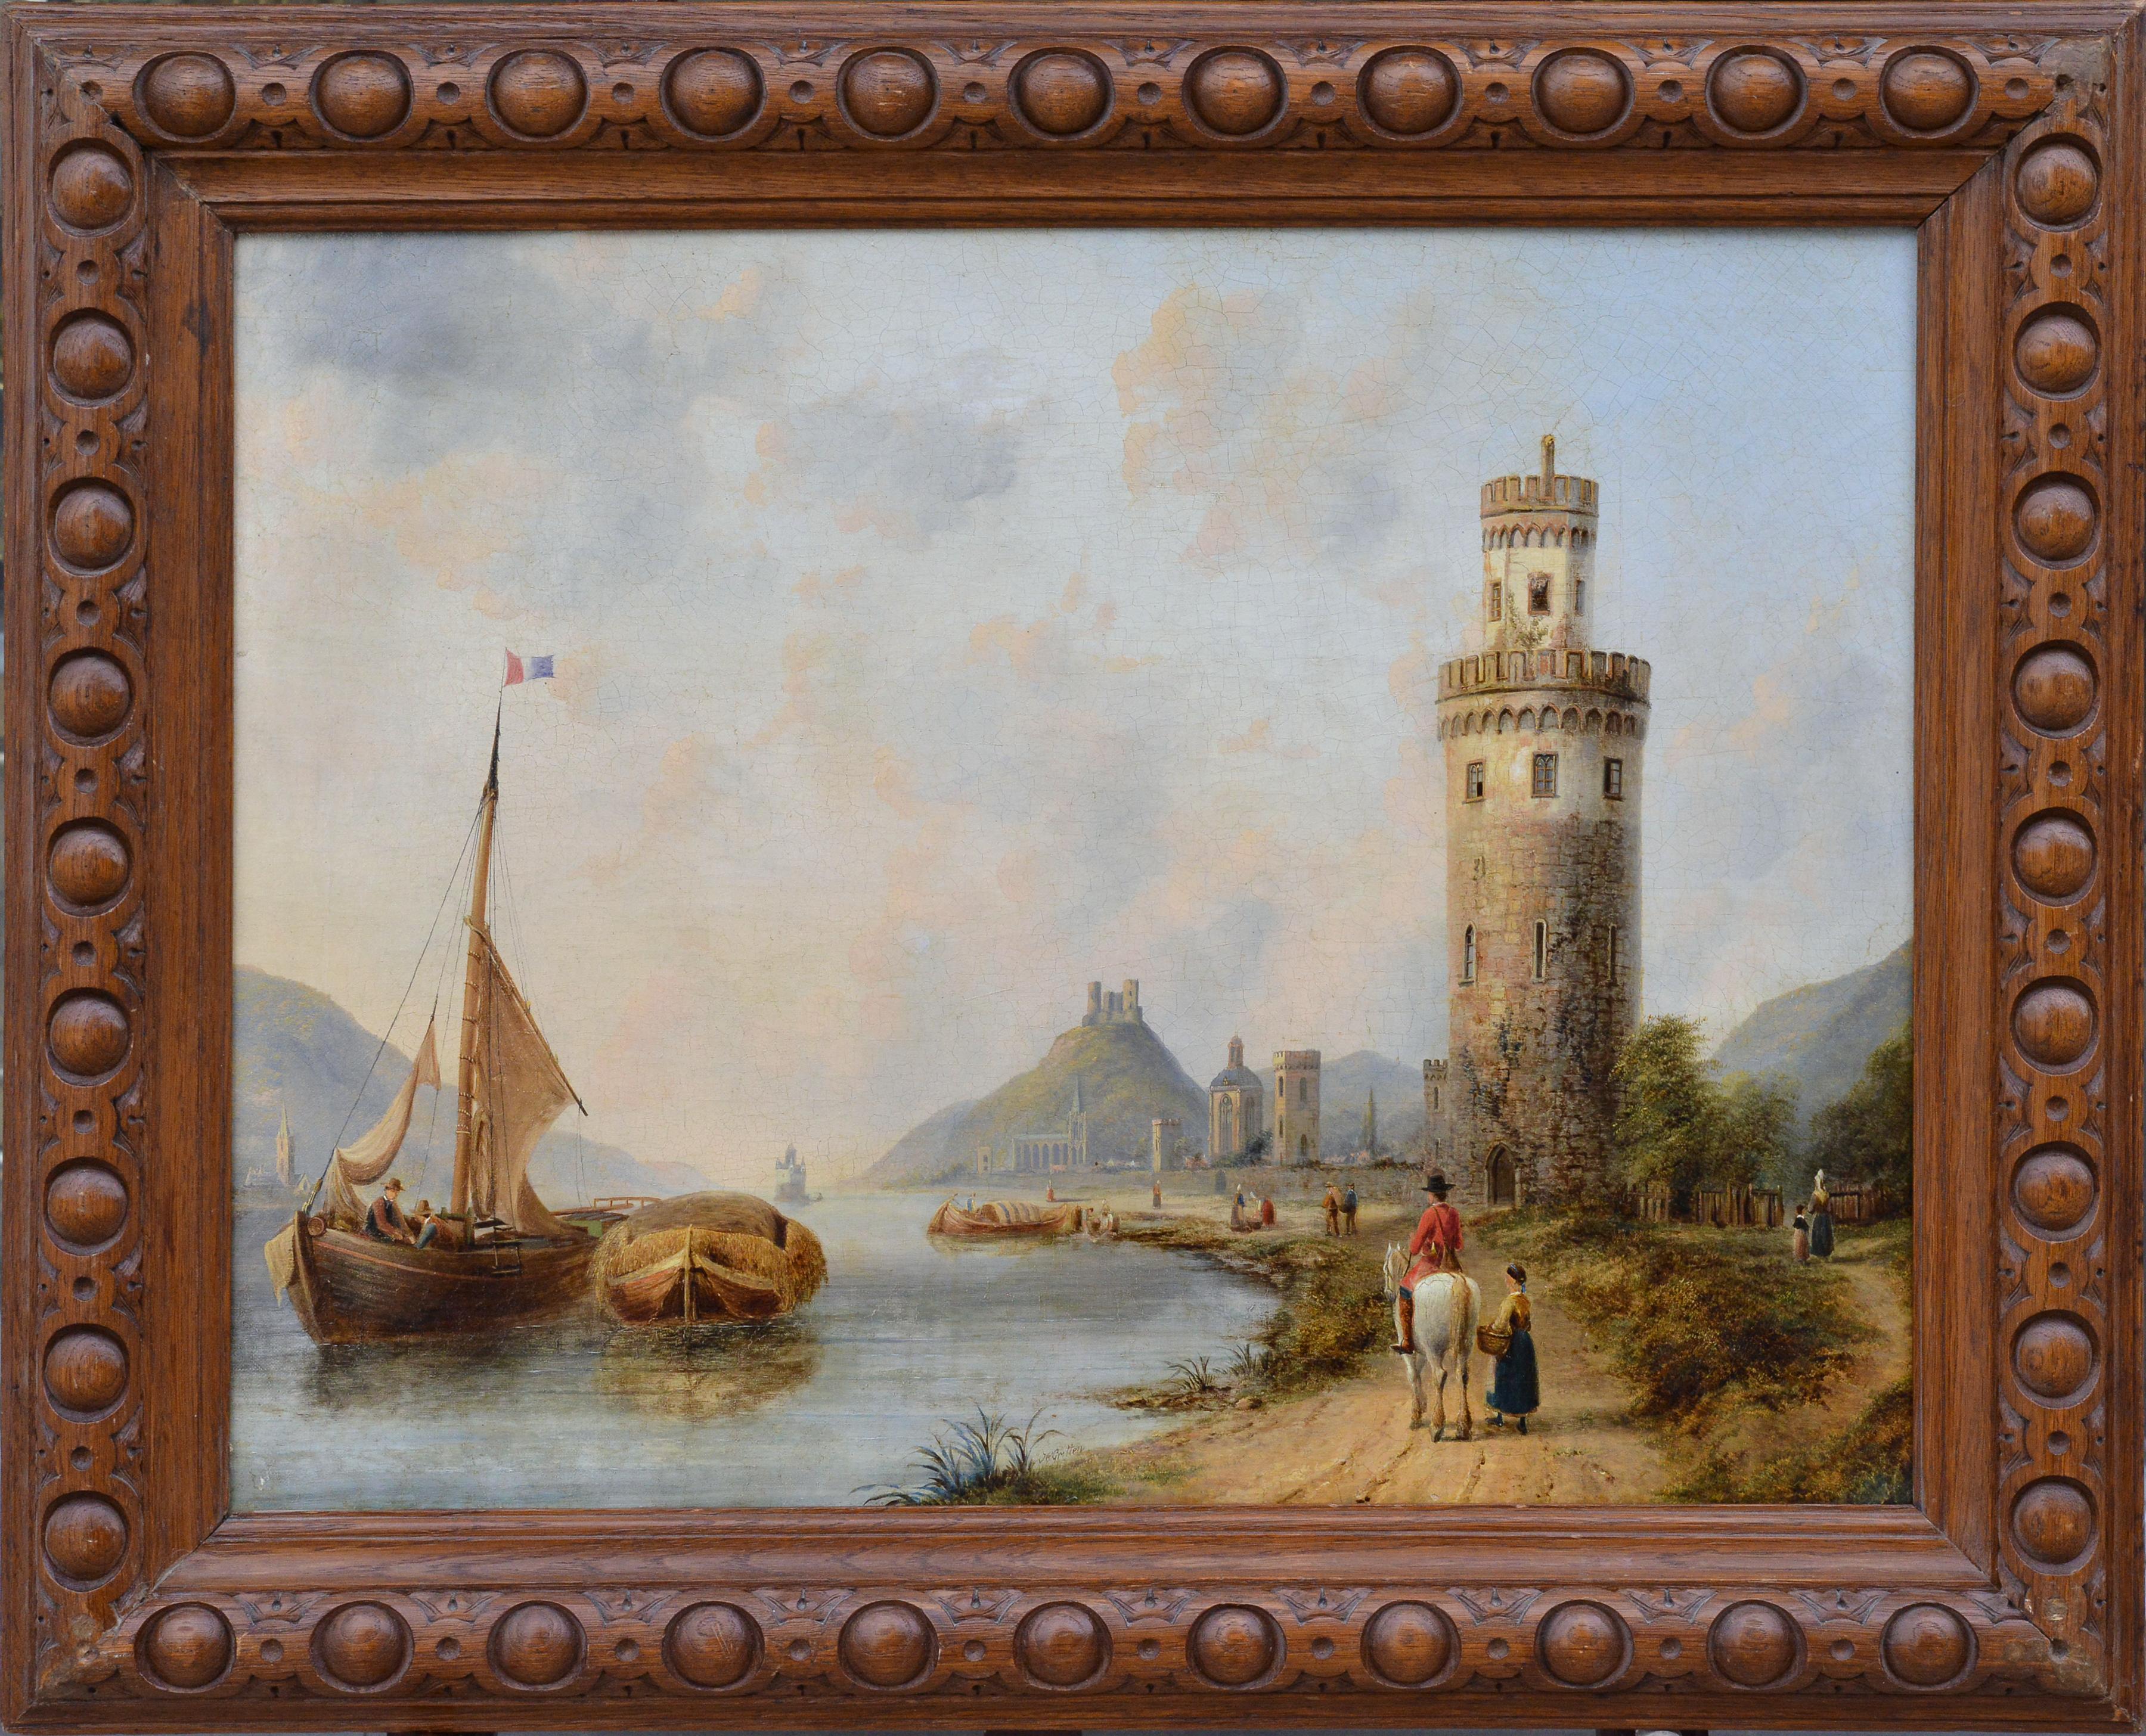 Oberwesel on Rhein Scenic Landscape 19th century British Master Oil Painting